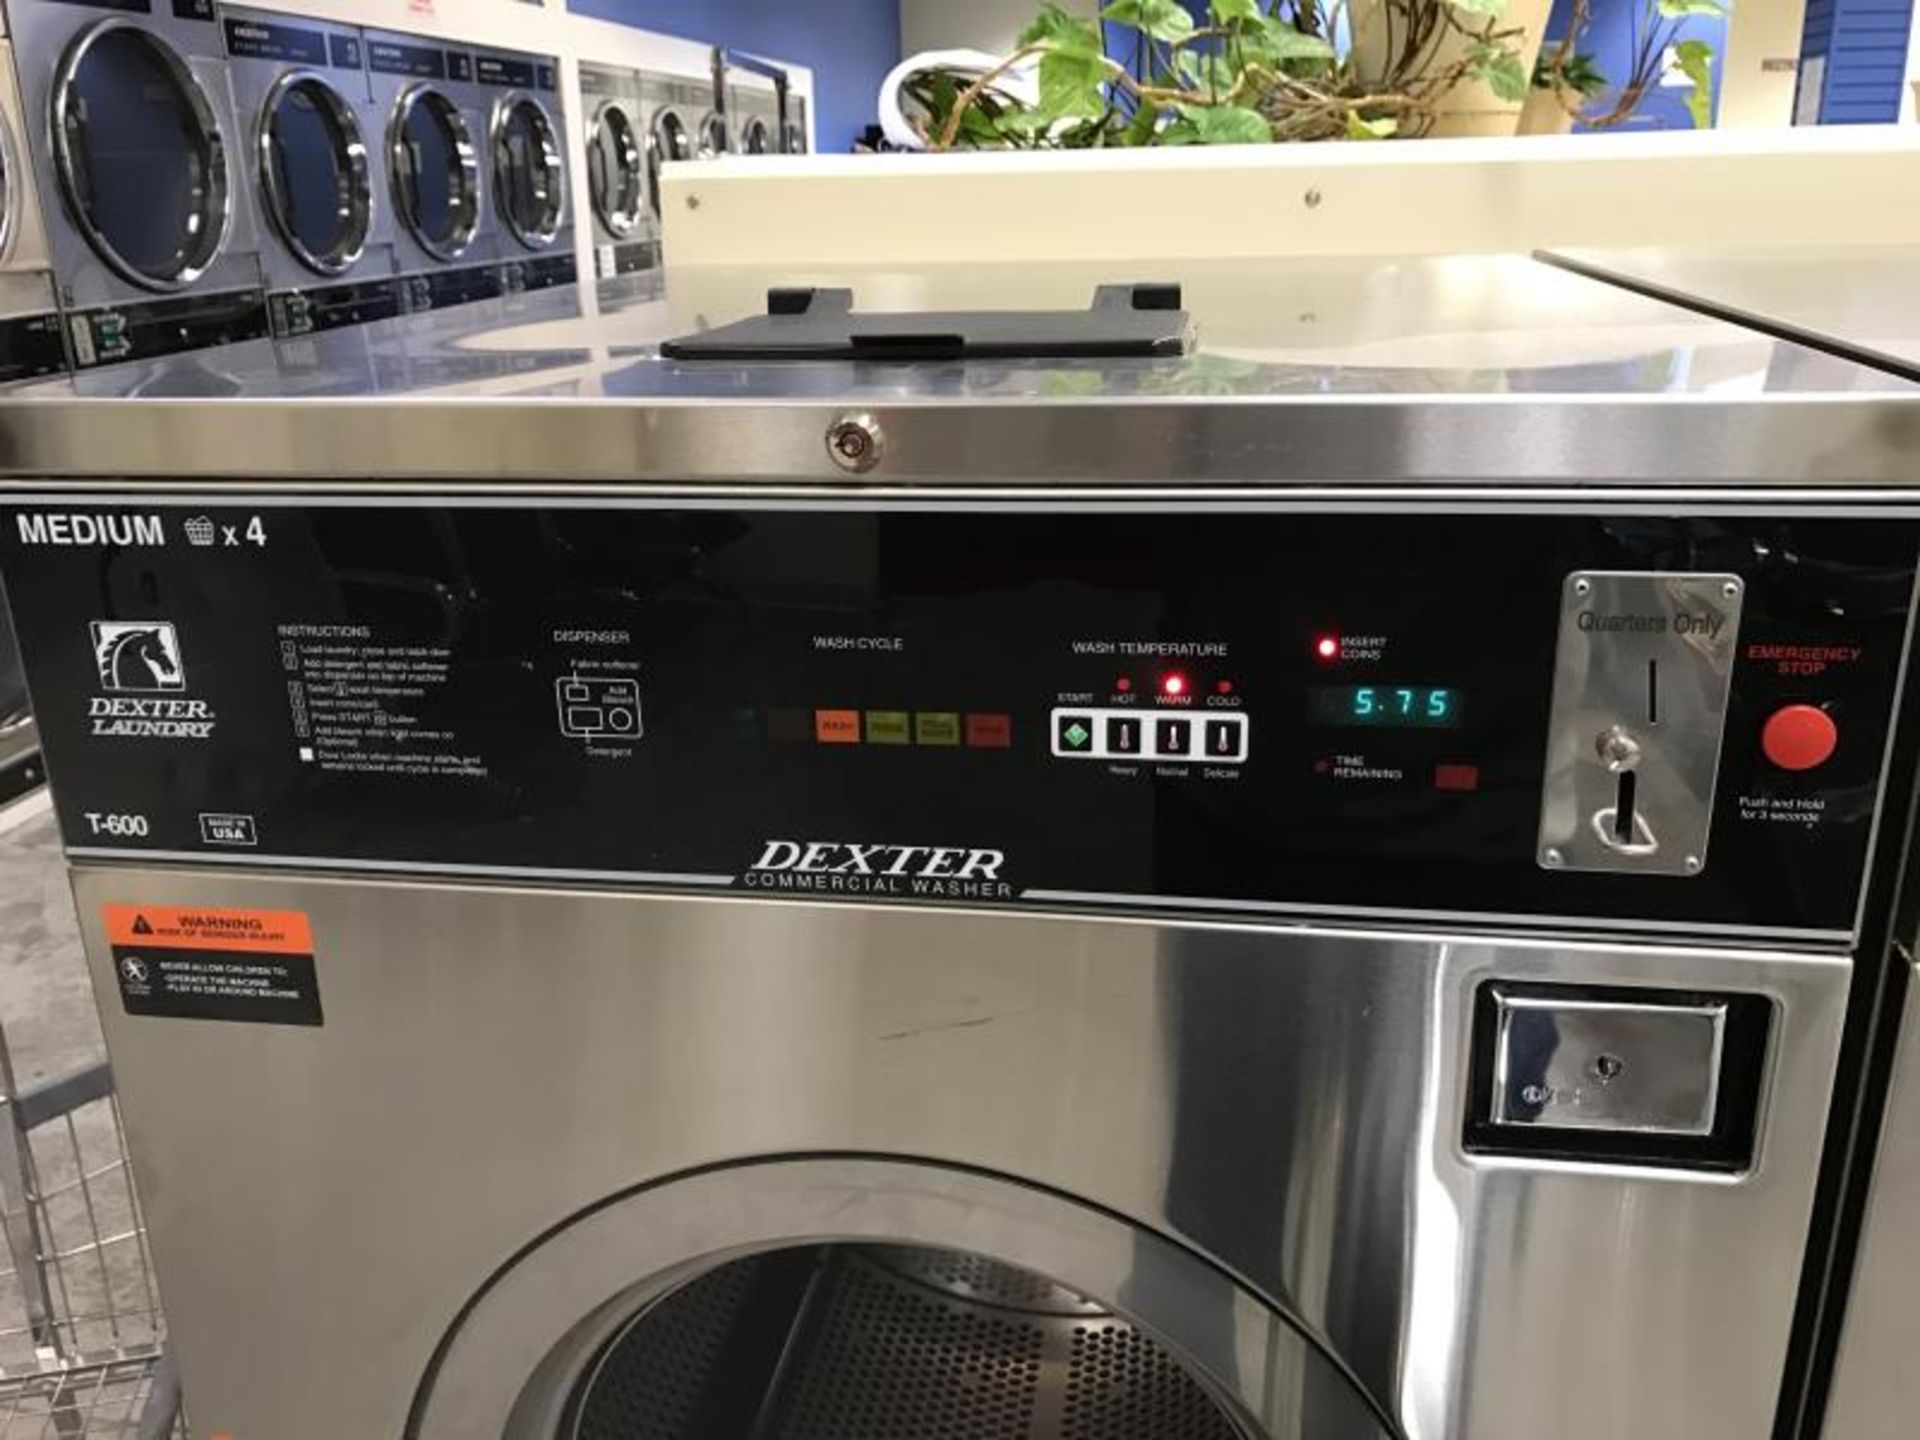 Dexter Commercial Washing Machine, Medium x 4, 40 Lbs., Model: T-600 / WCAD40KCX-12CN, SN: 531831 - Image 3 of 4